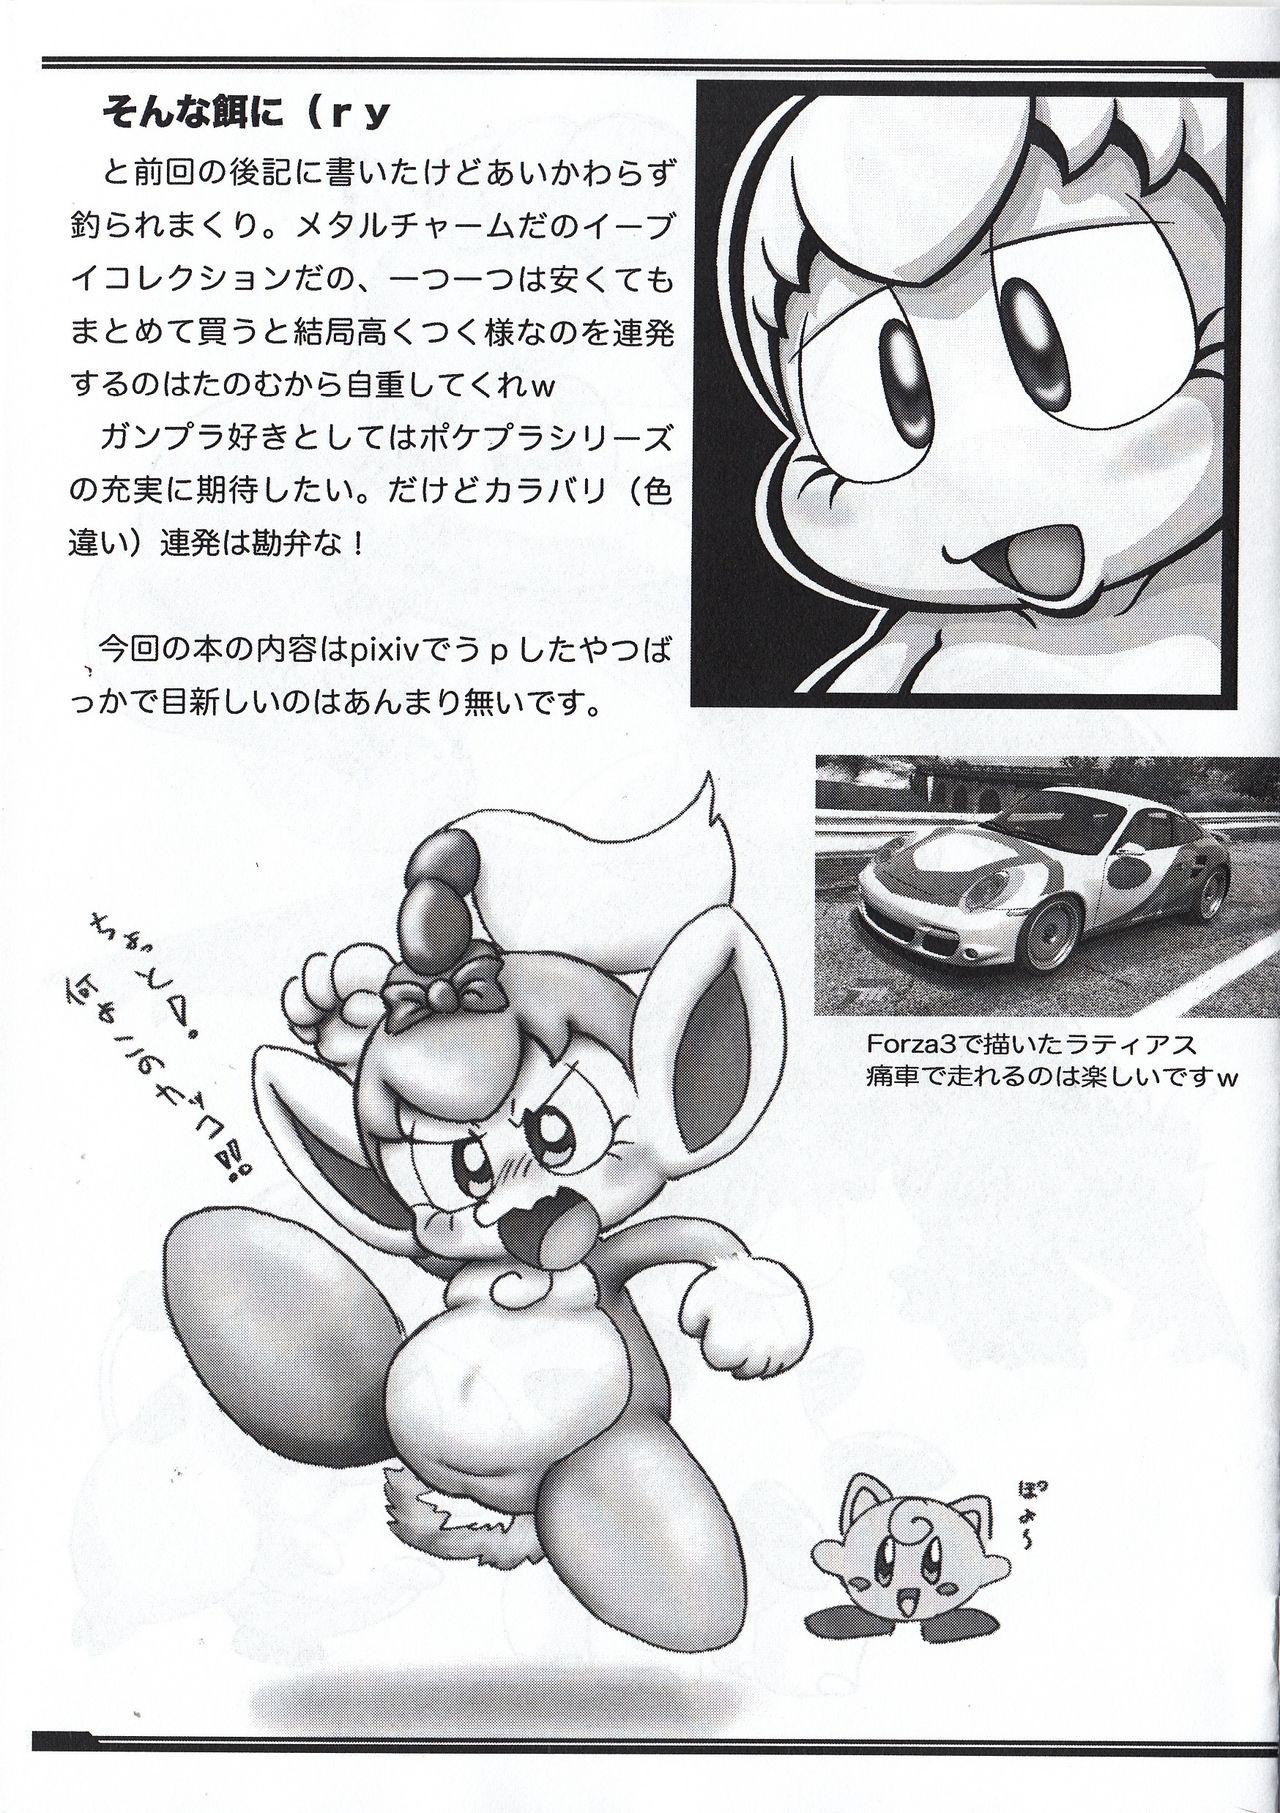 British P-Kemo09 - Pokemon Kirby Animal crossing Breeding - Page 2